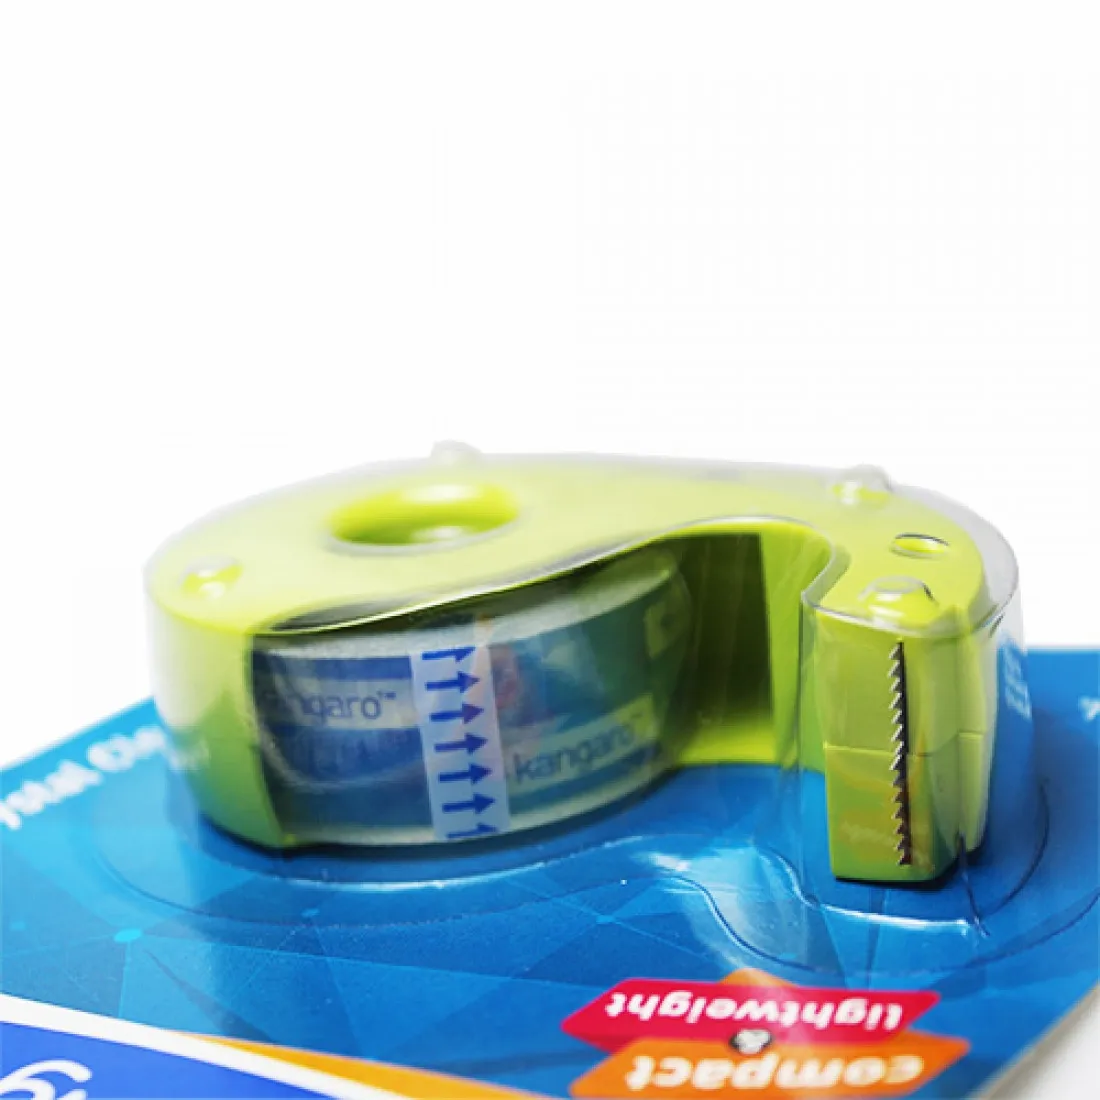 Kangaro Tape Dispenser TD-18/Y  Compact & Light Weight Pack of 1